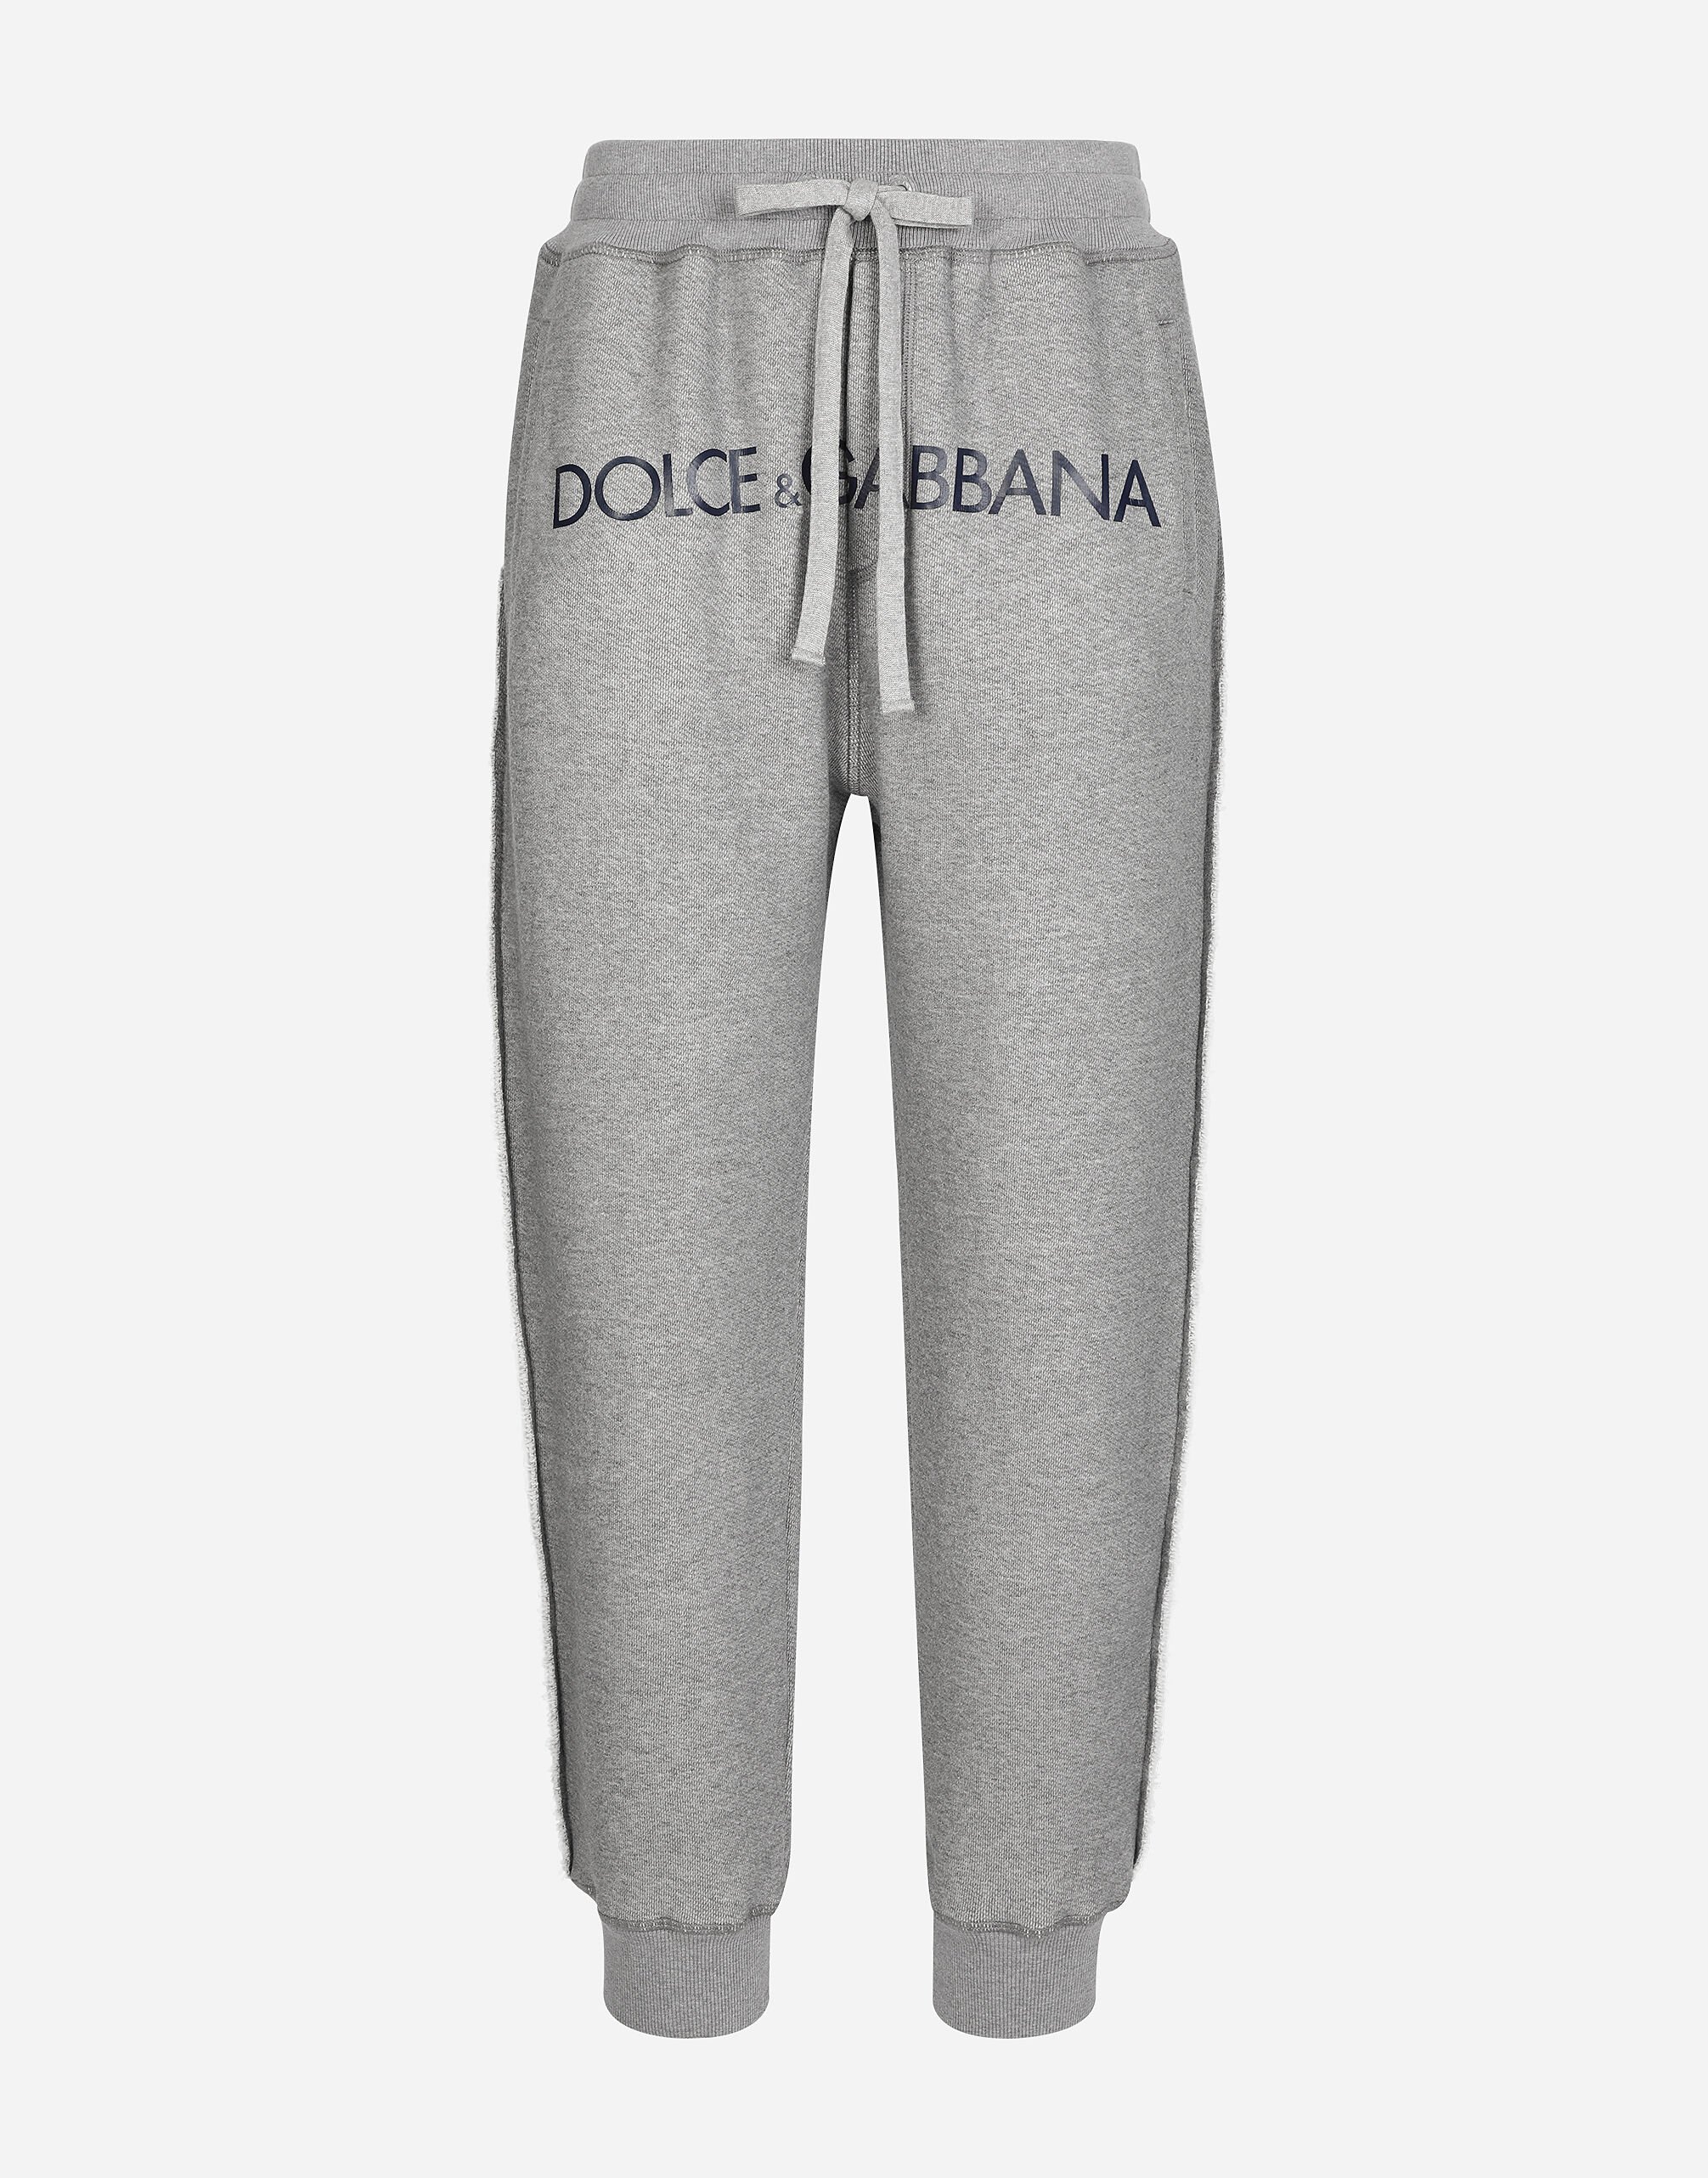 Dolce & Gabbana Jogging pants with Dolce&Gabbana logo Print GVUZATHI7X6